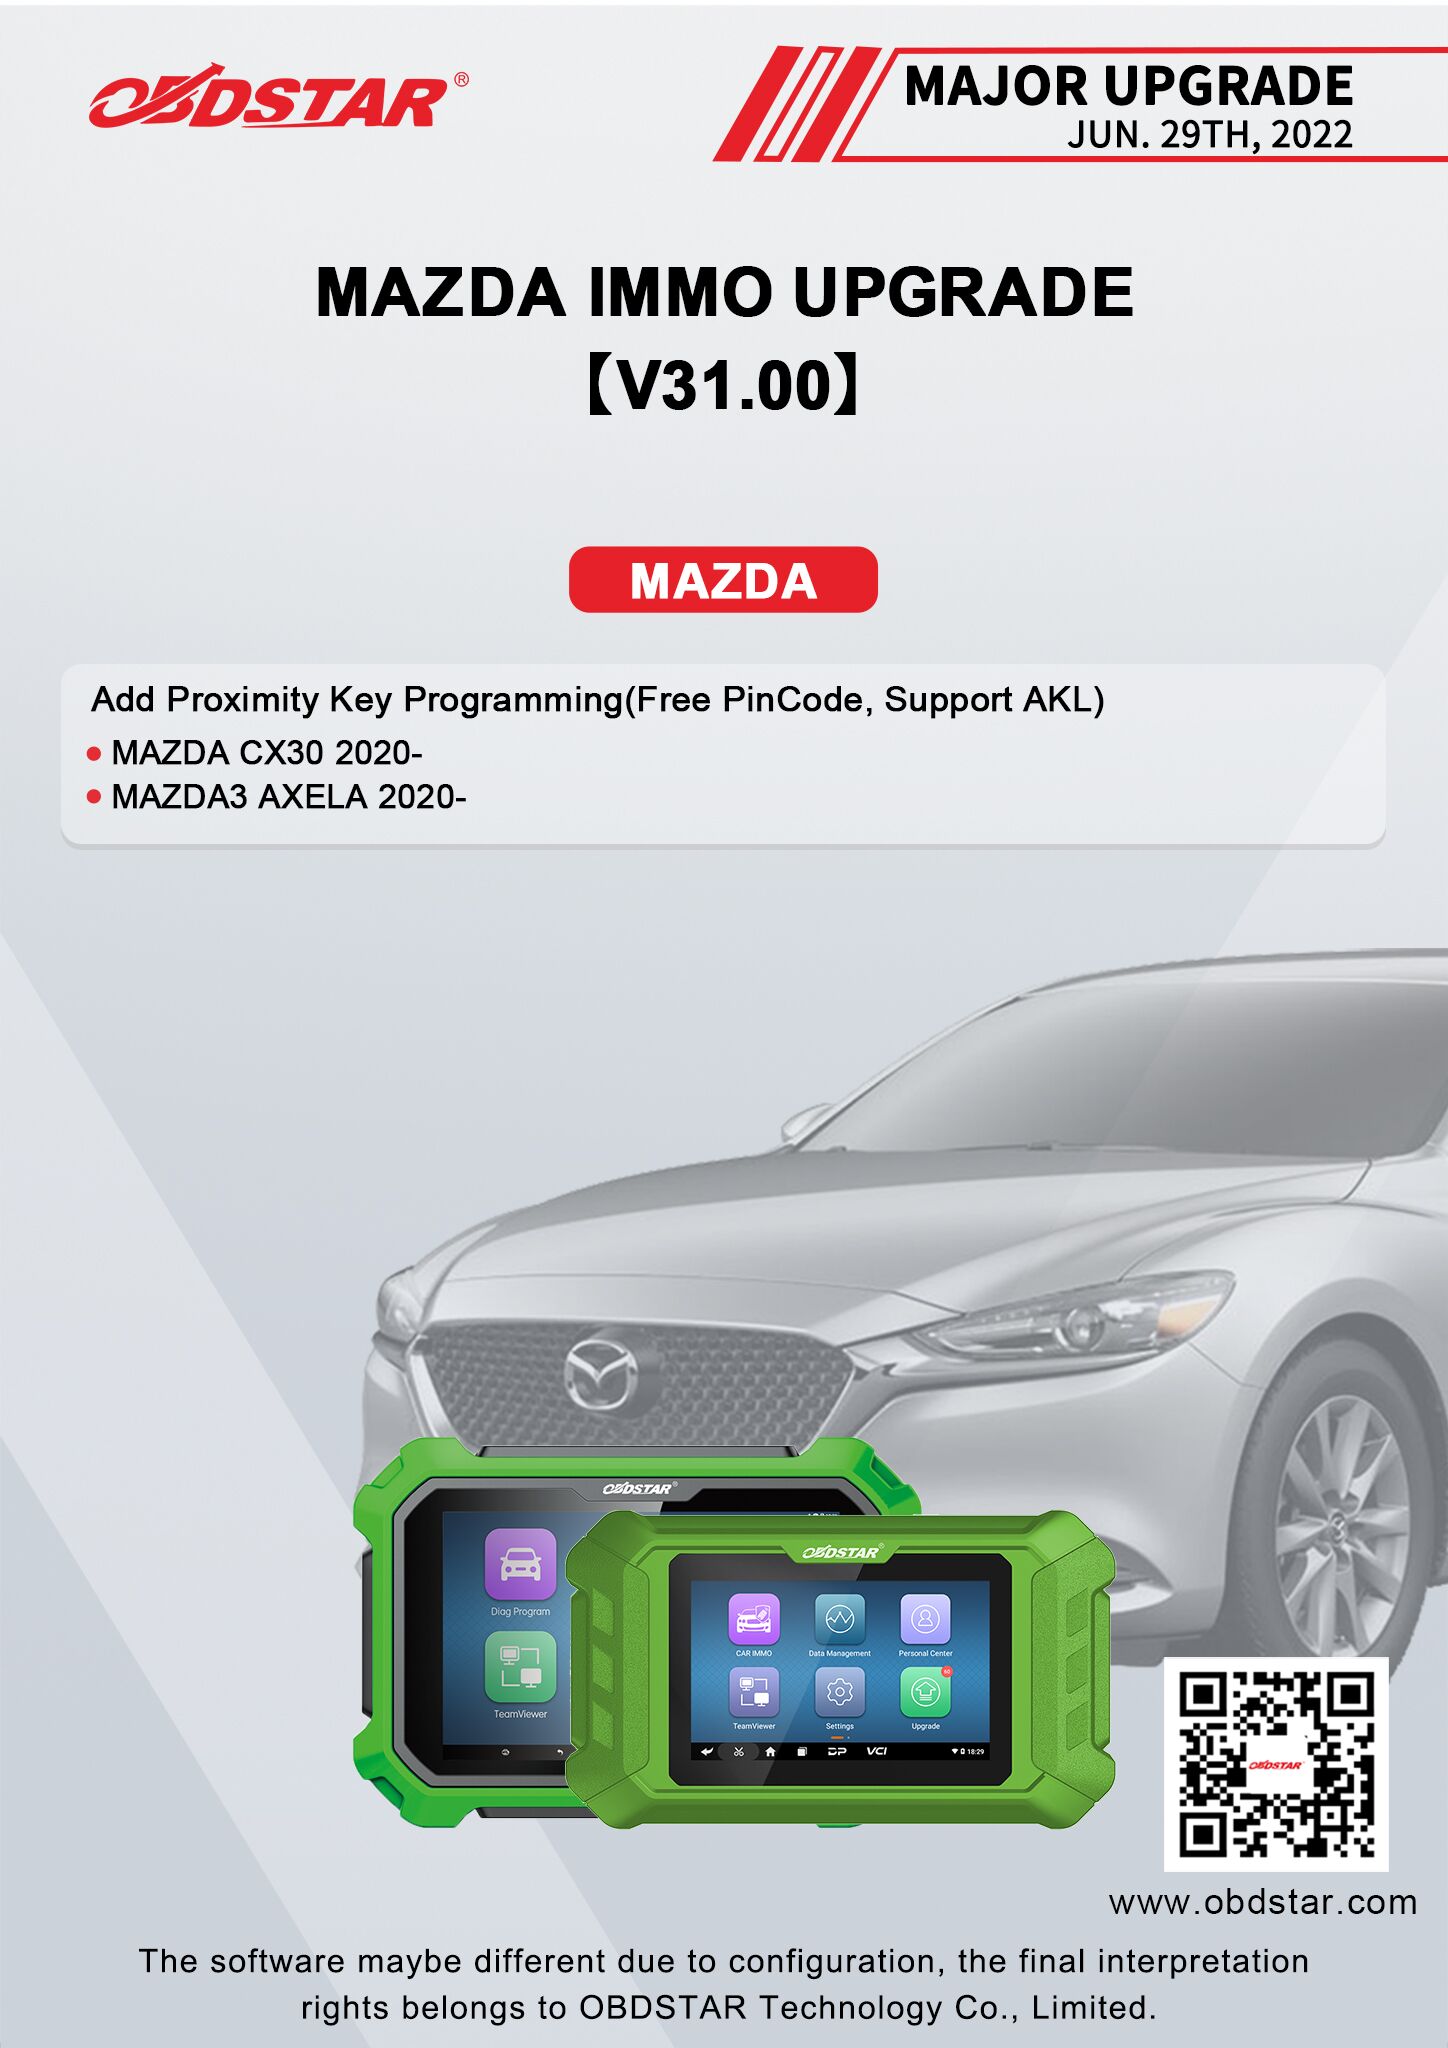 OBDSTAR X300 DP Plus Mazda IMMO Funtion Upgrade to V31.00